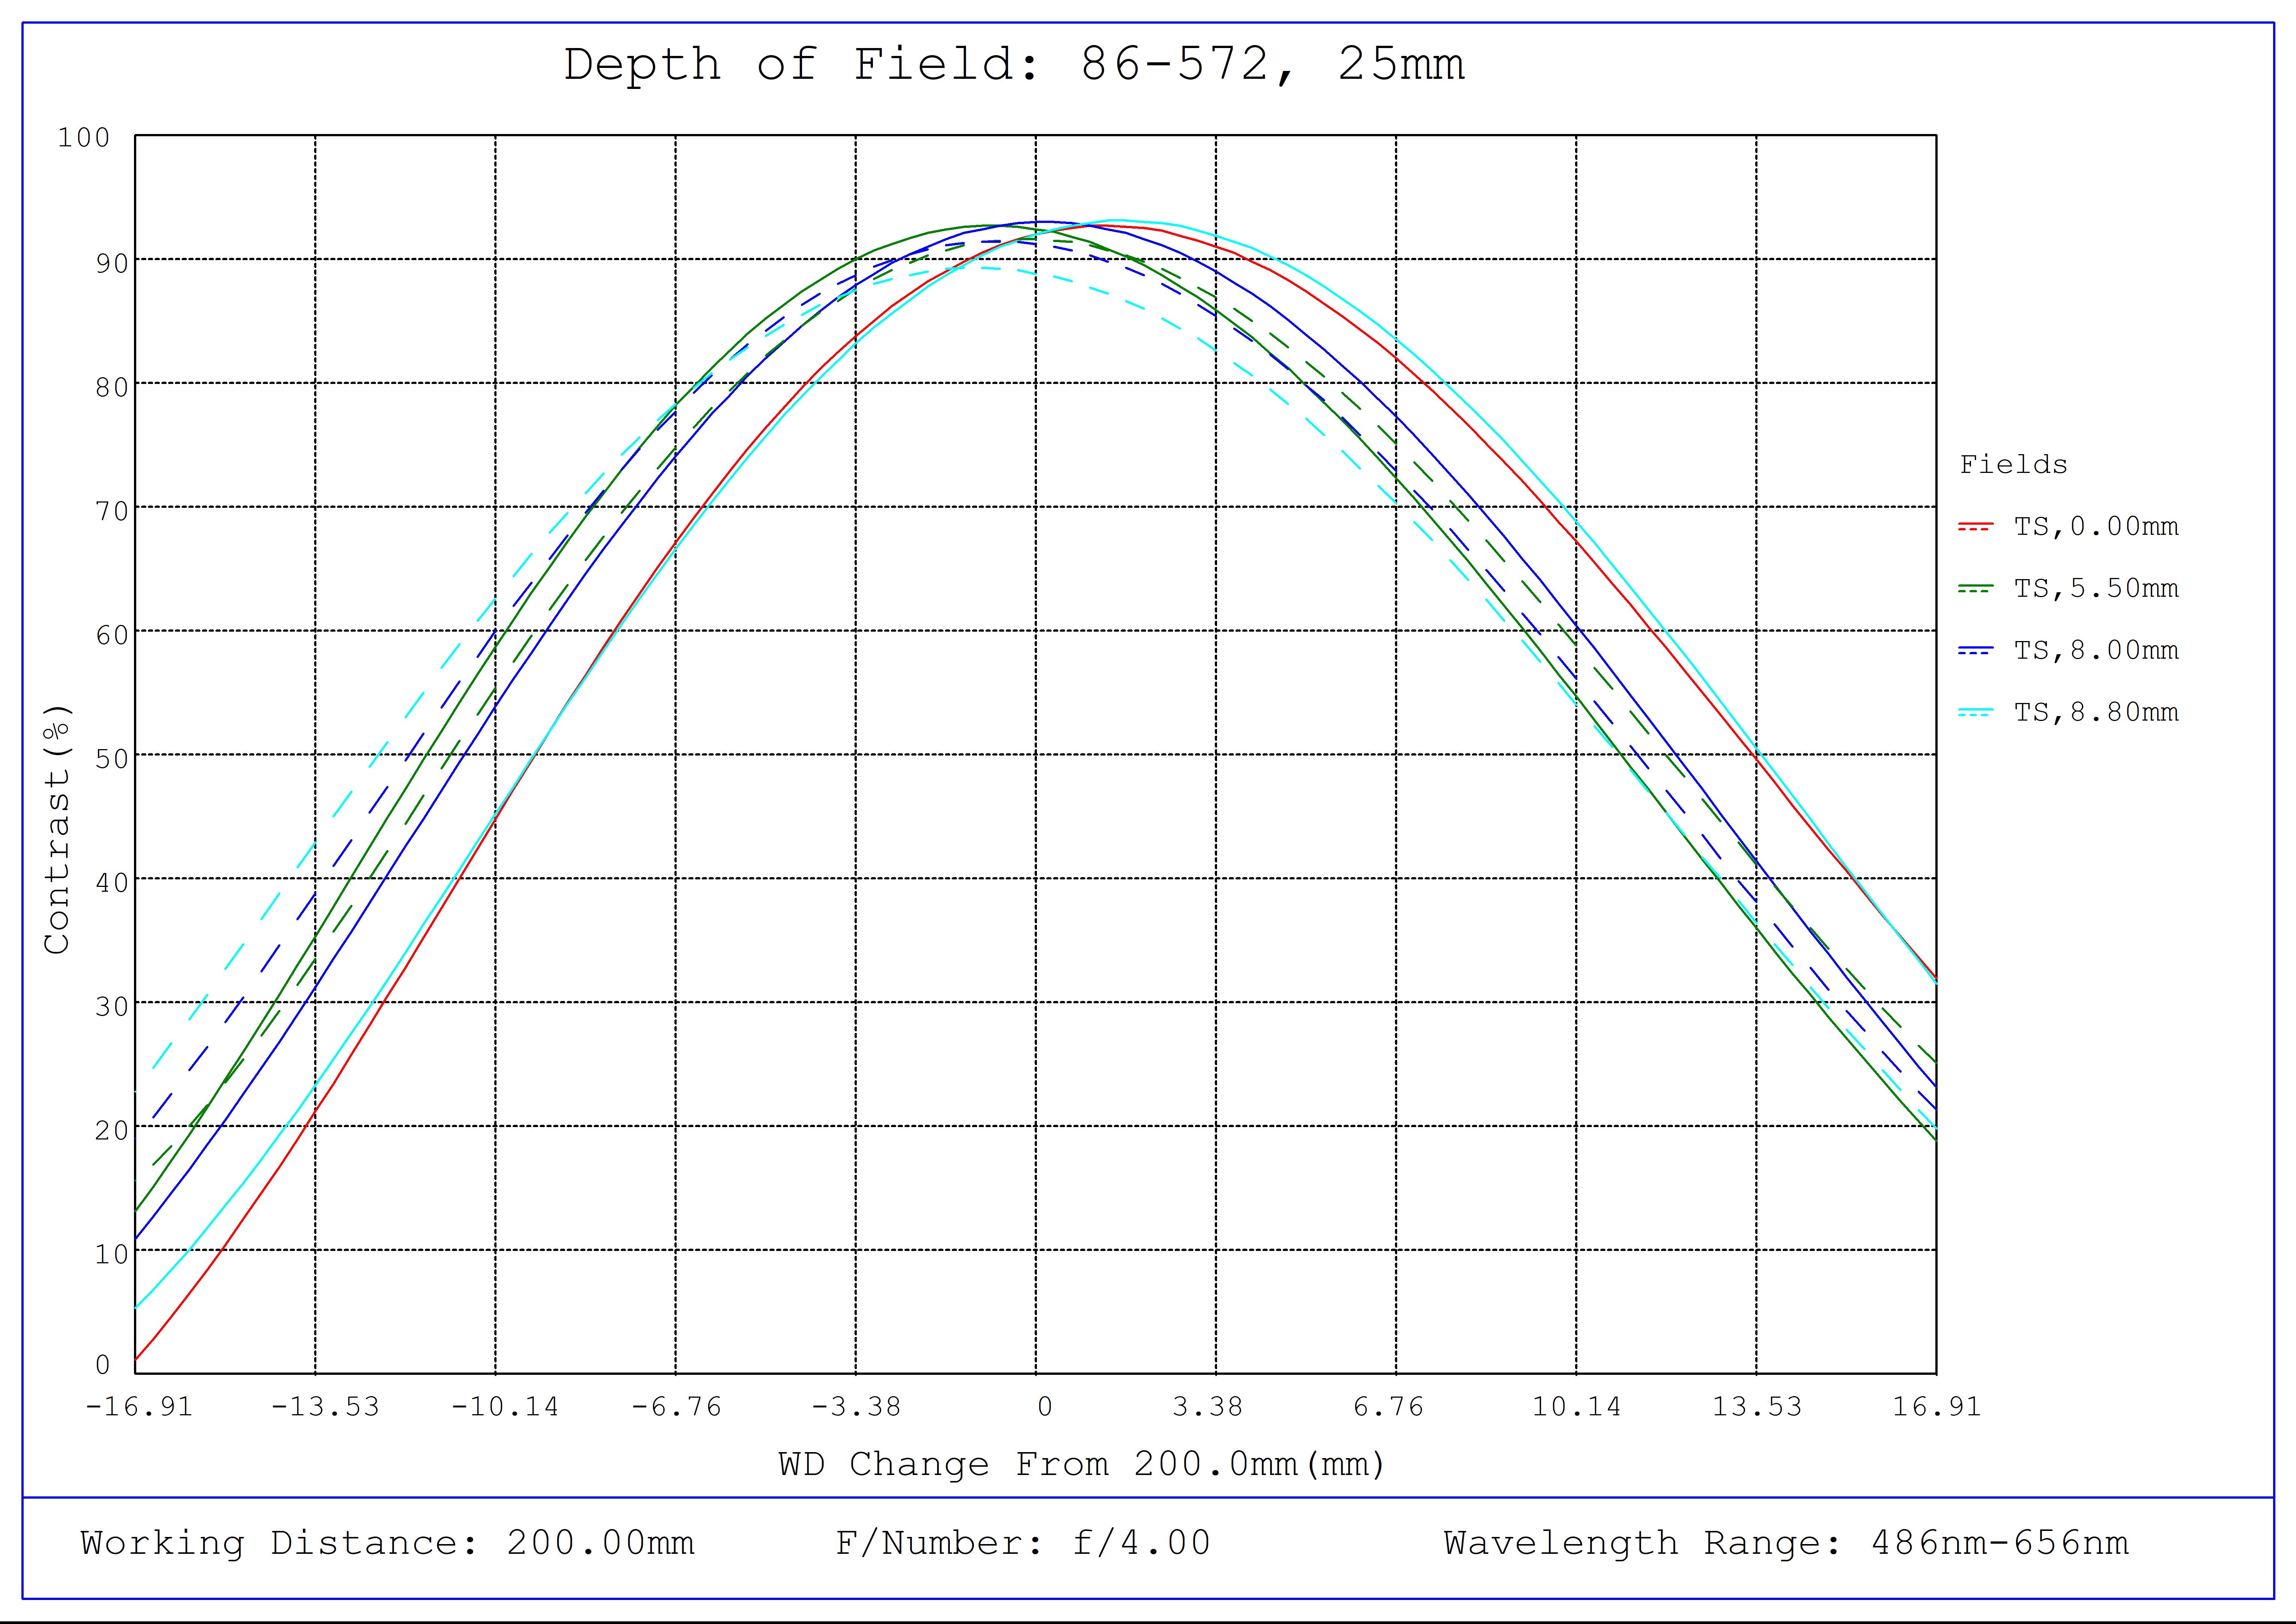 #86-572, 25mm Focal Length, HP Series Fixed Focal Length Lens, Depth of Field Plot, 200mm Working Distance, f4